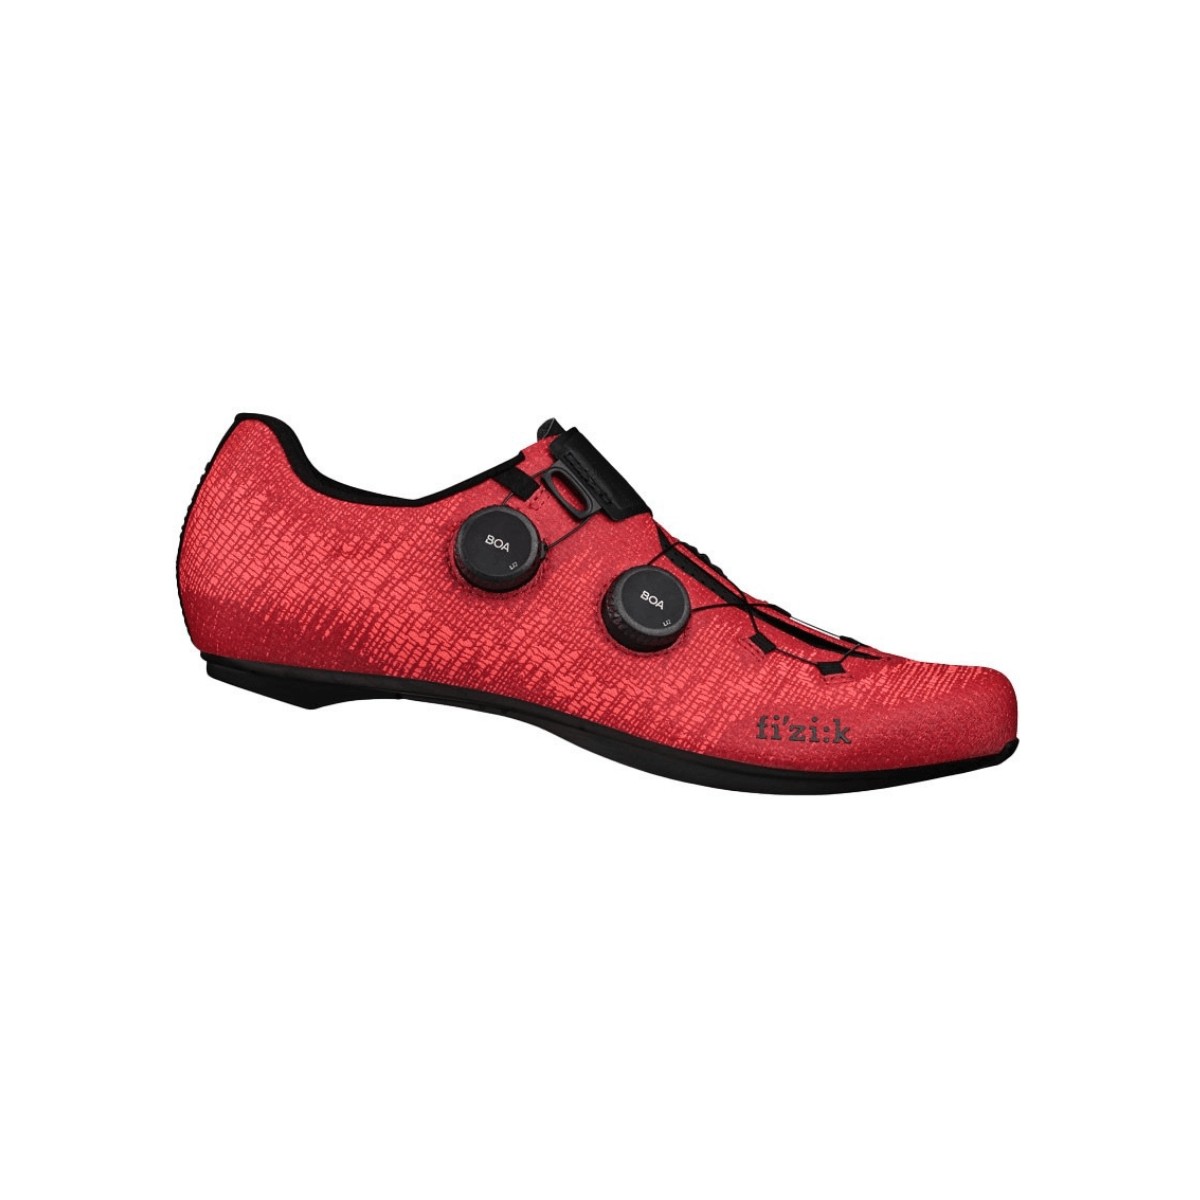 Photos - Cycling Shoes Fizik Vento Infinito Knit Carbon 2 Coral Black Shoes, Size 43,5 - EUR VER2 